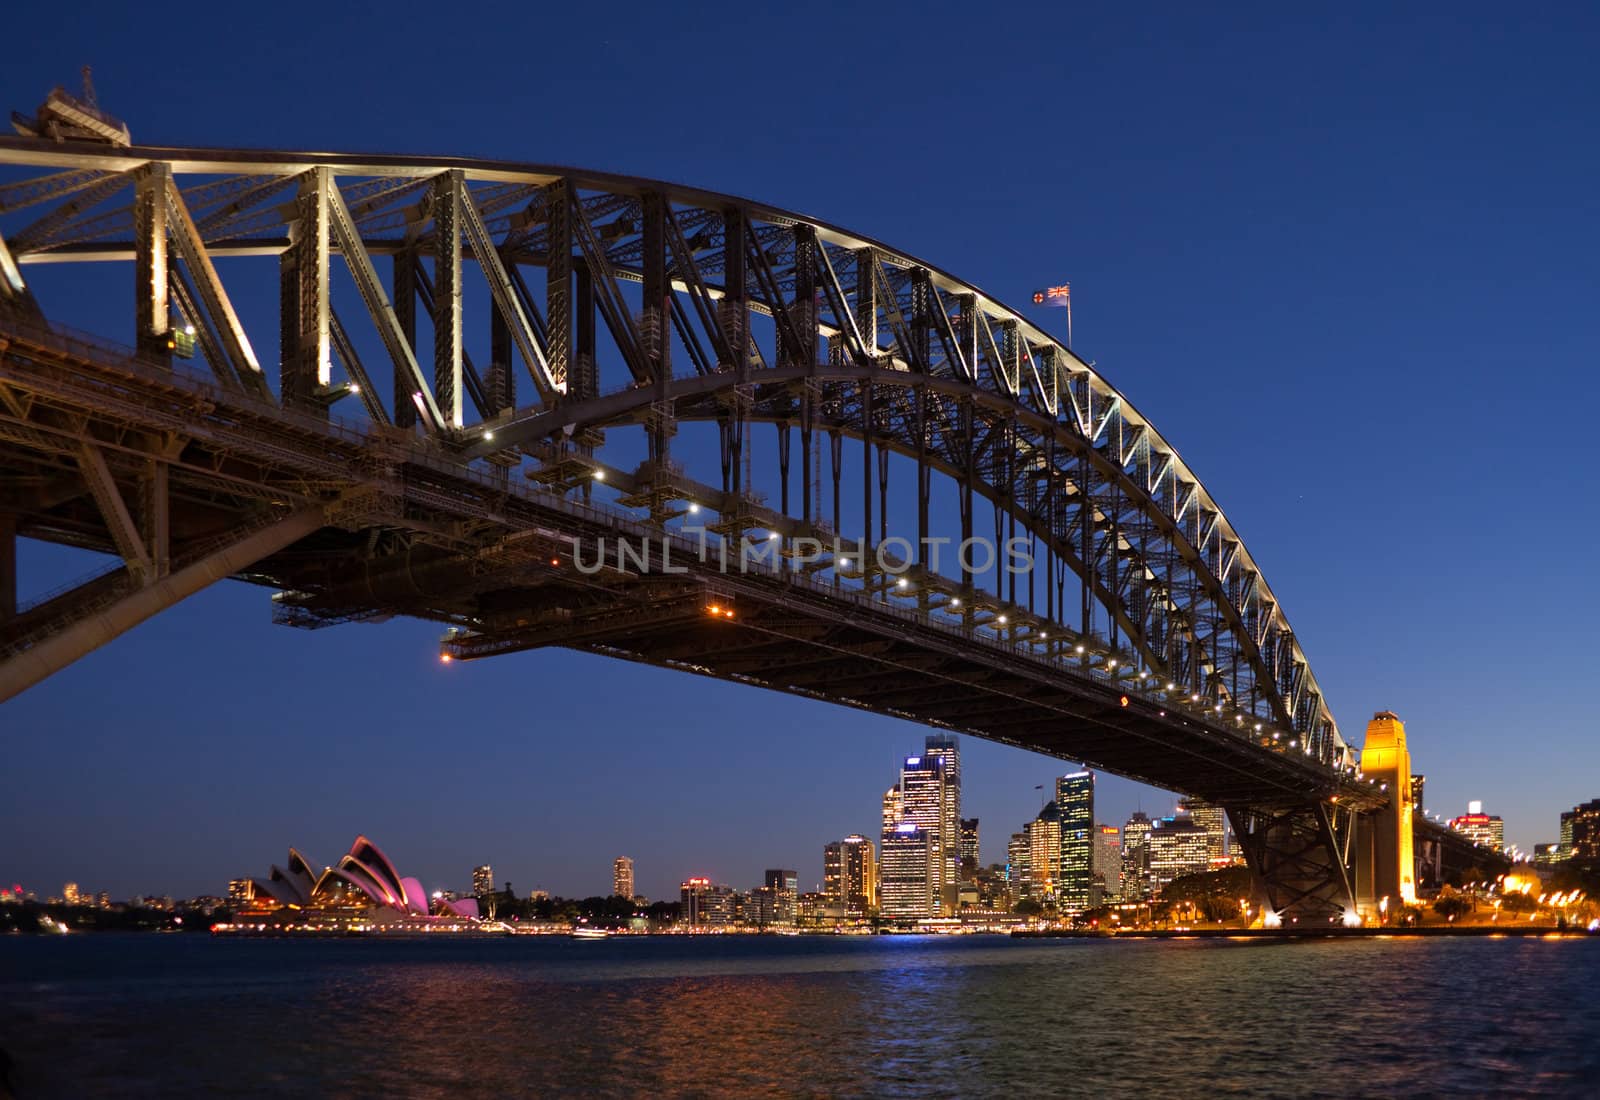 Sydney Harbor Bridge by edan